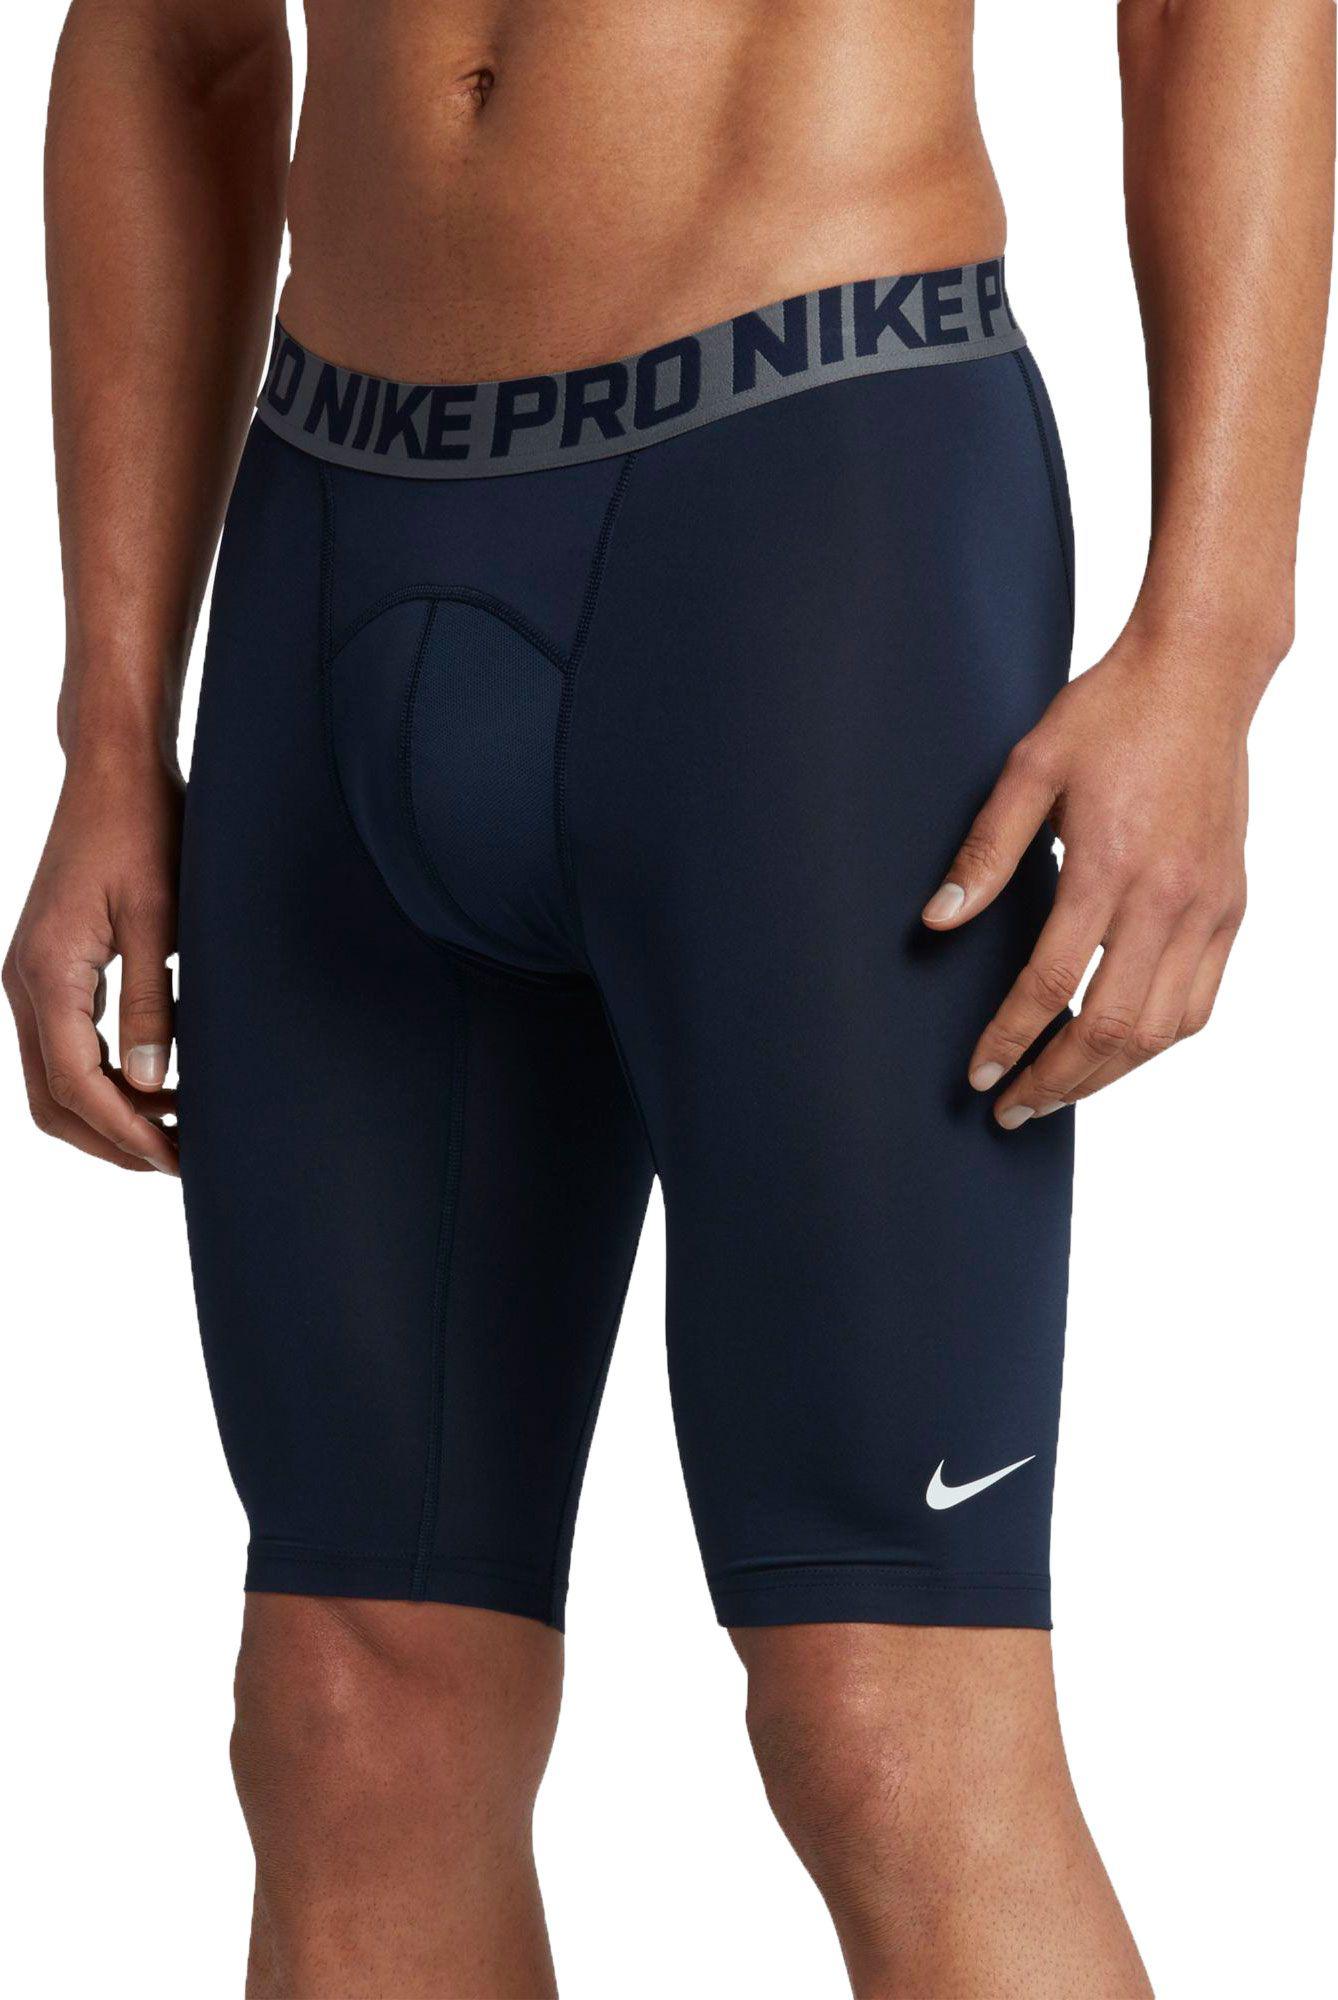 nike 9 compression shorts